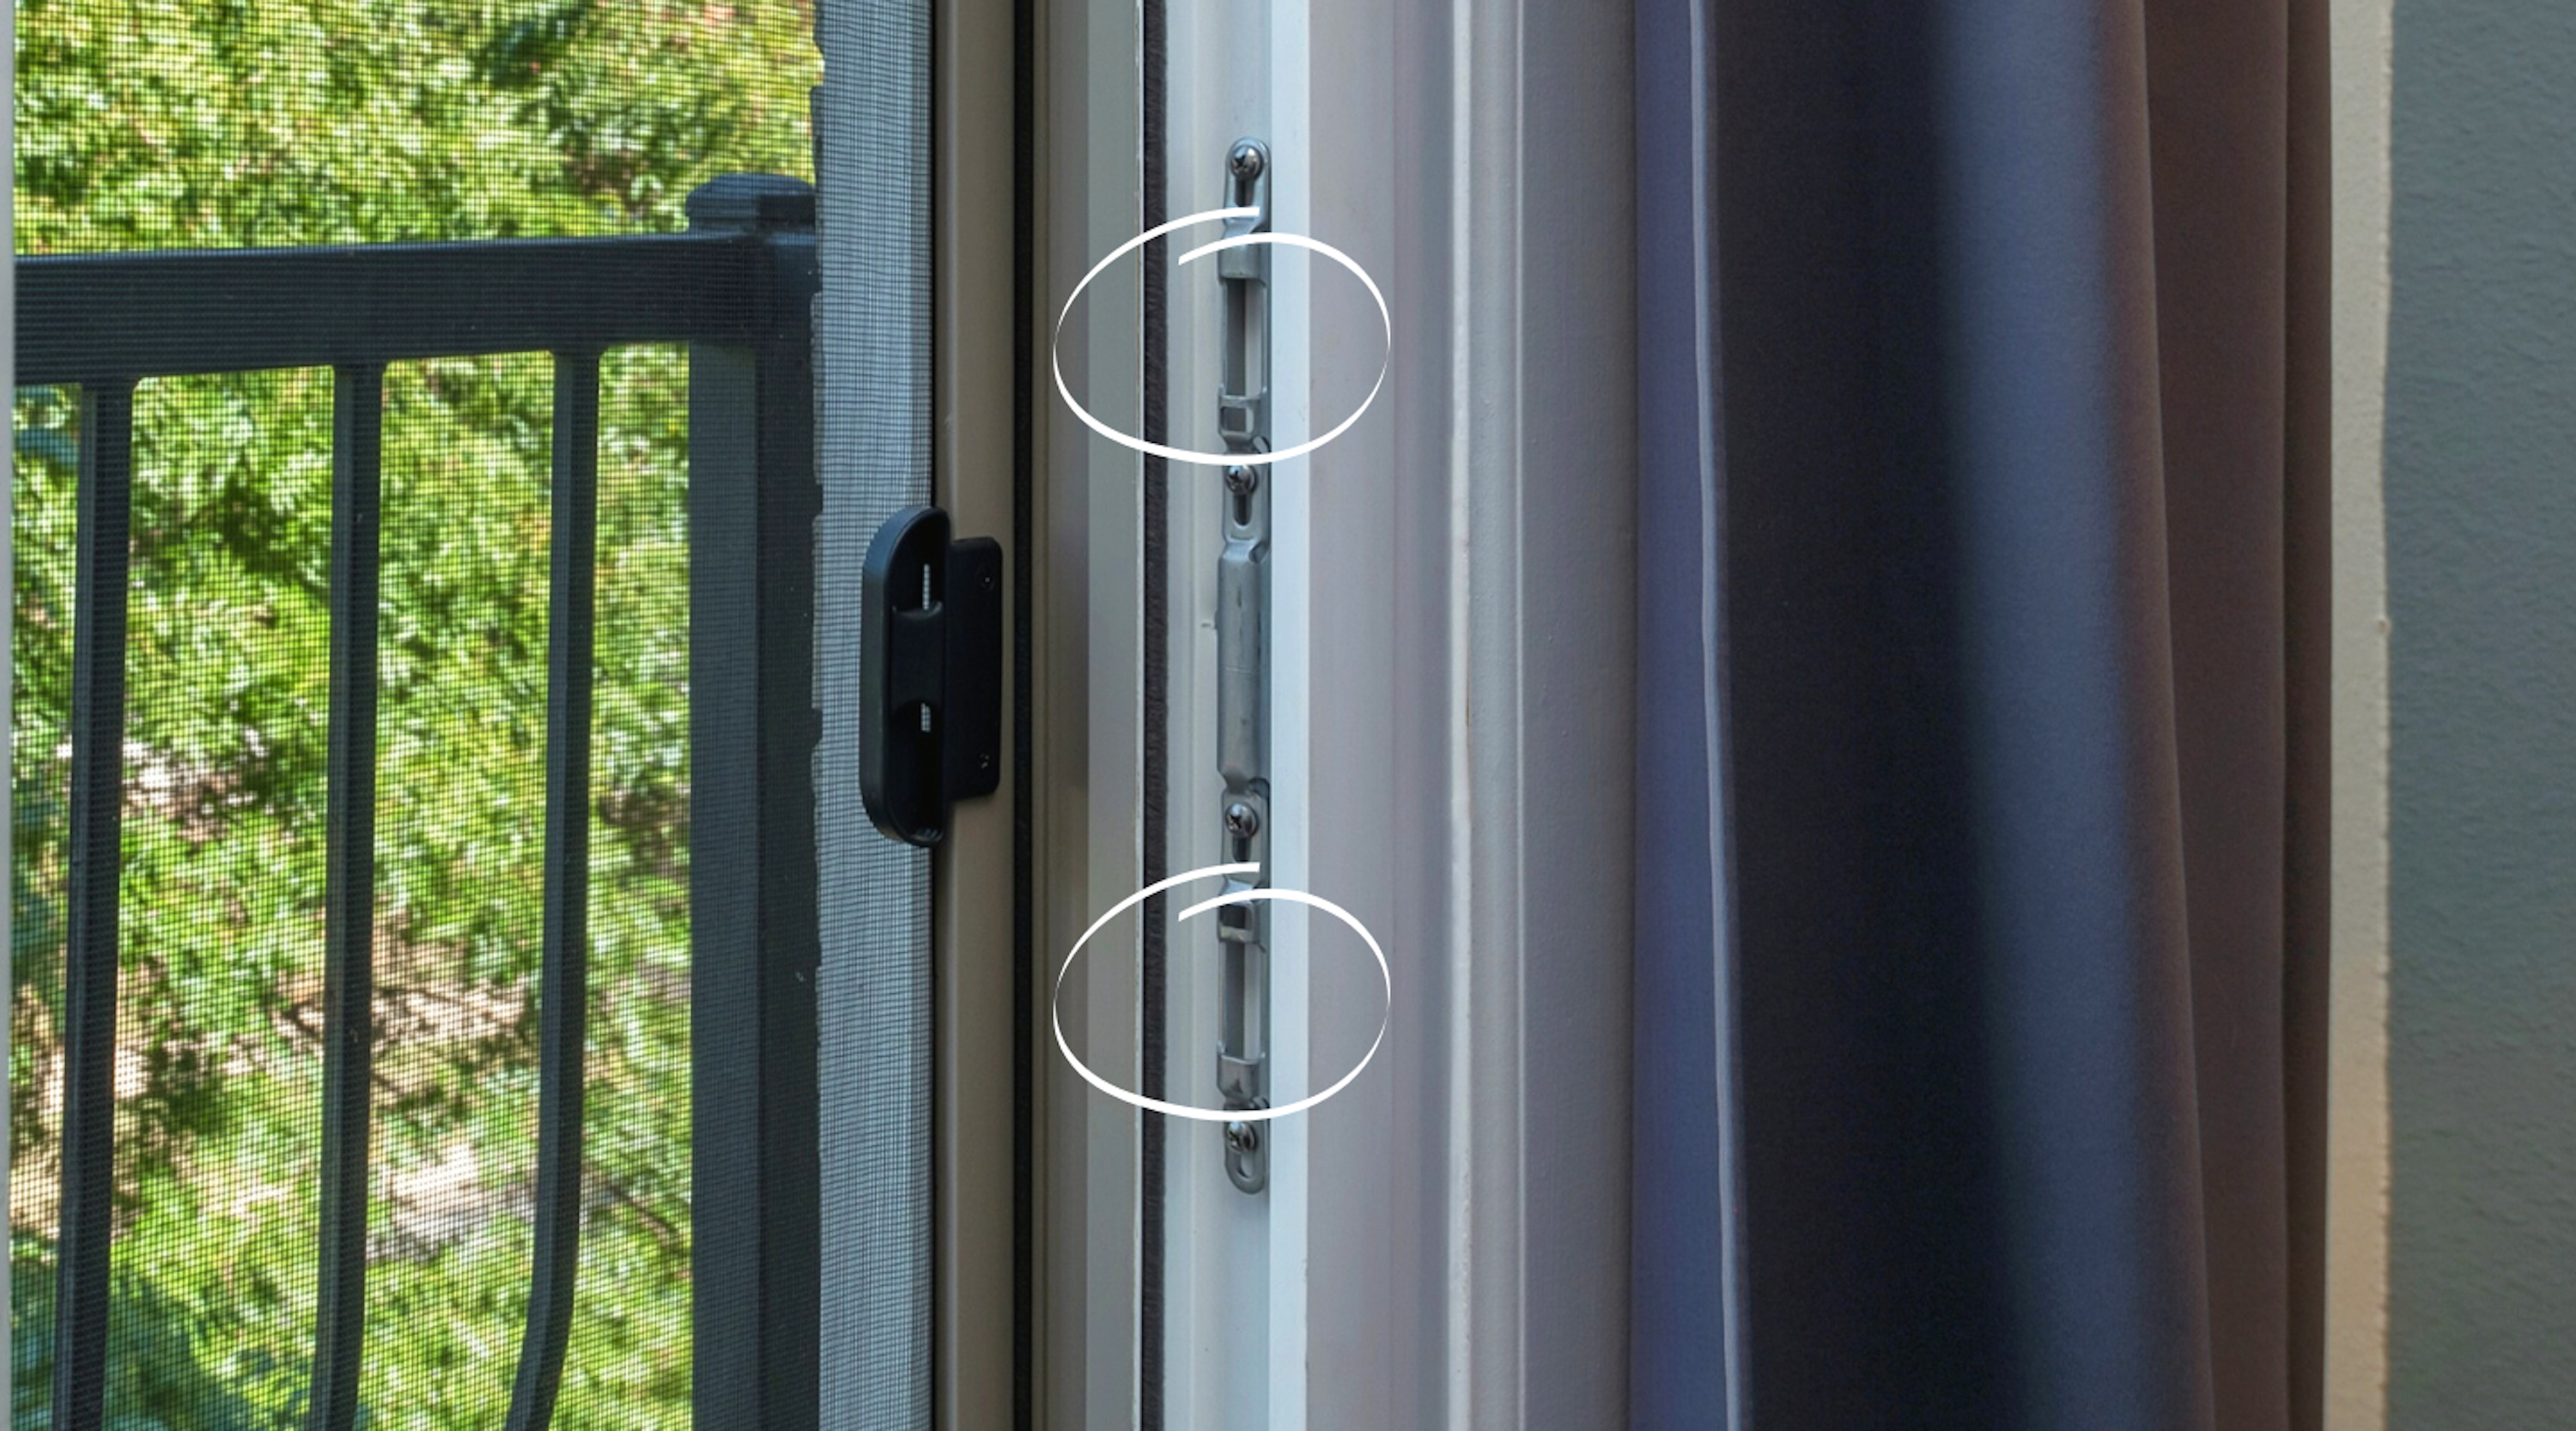 How to Adjust Sliding Glass Doors